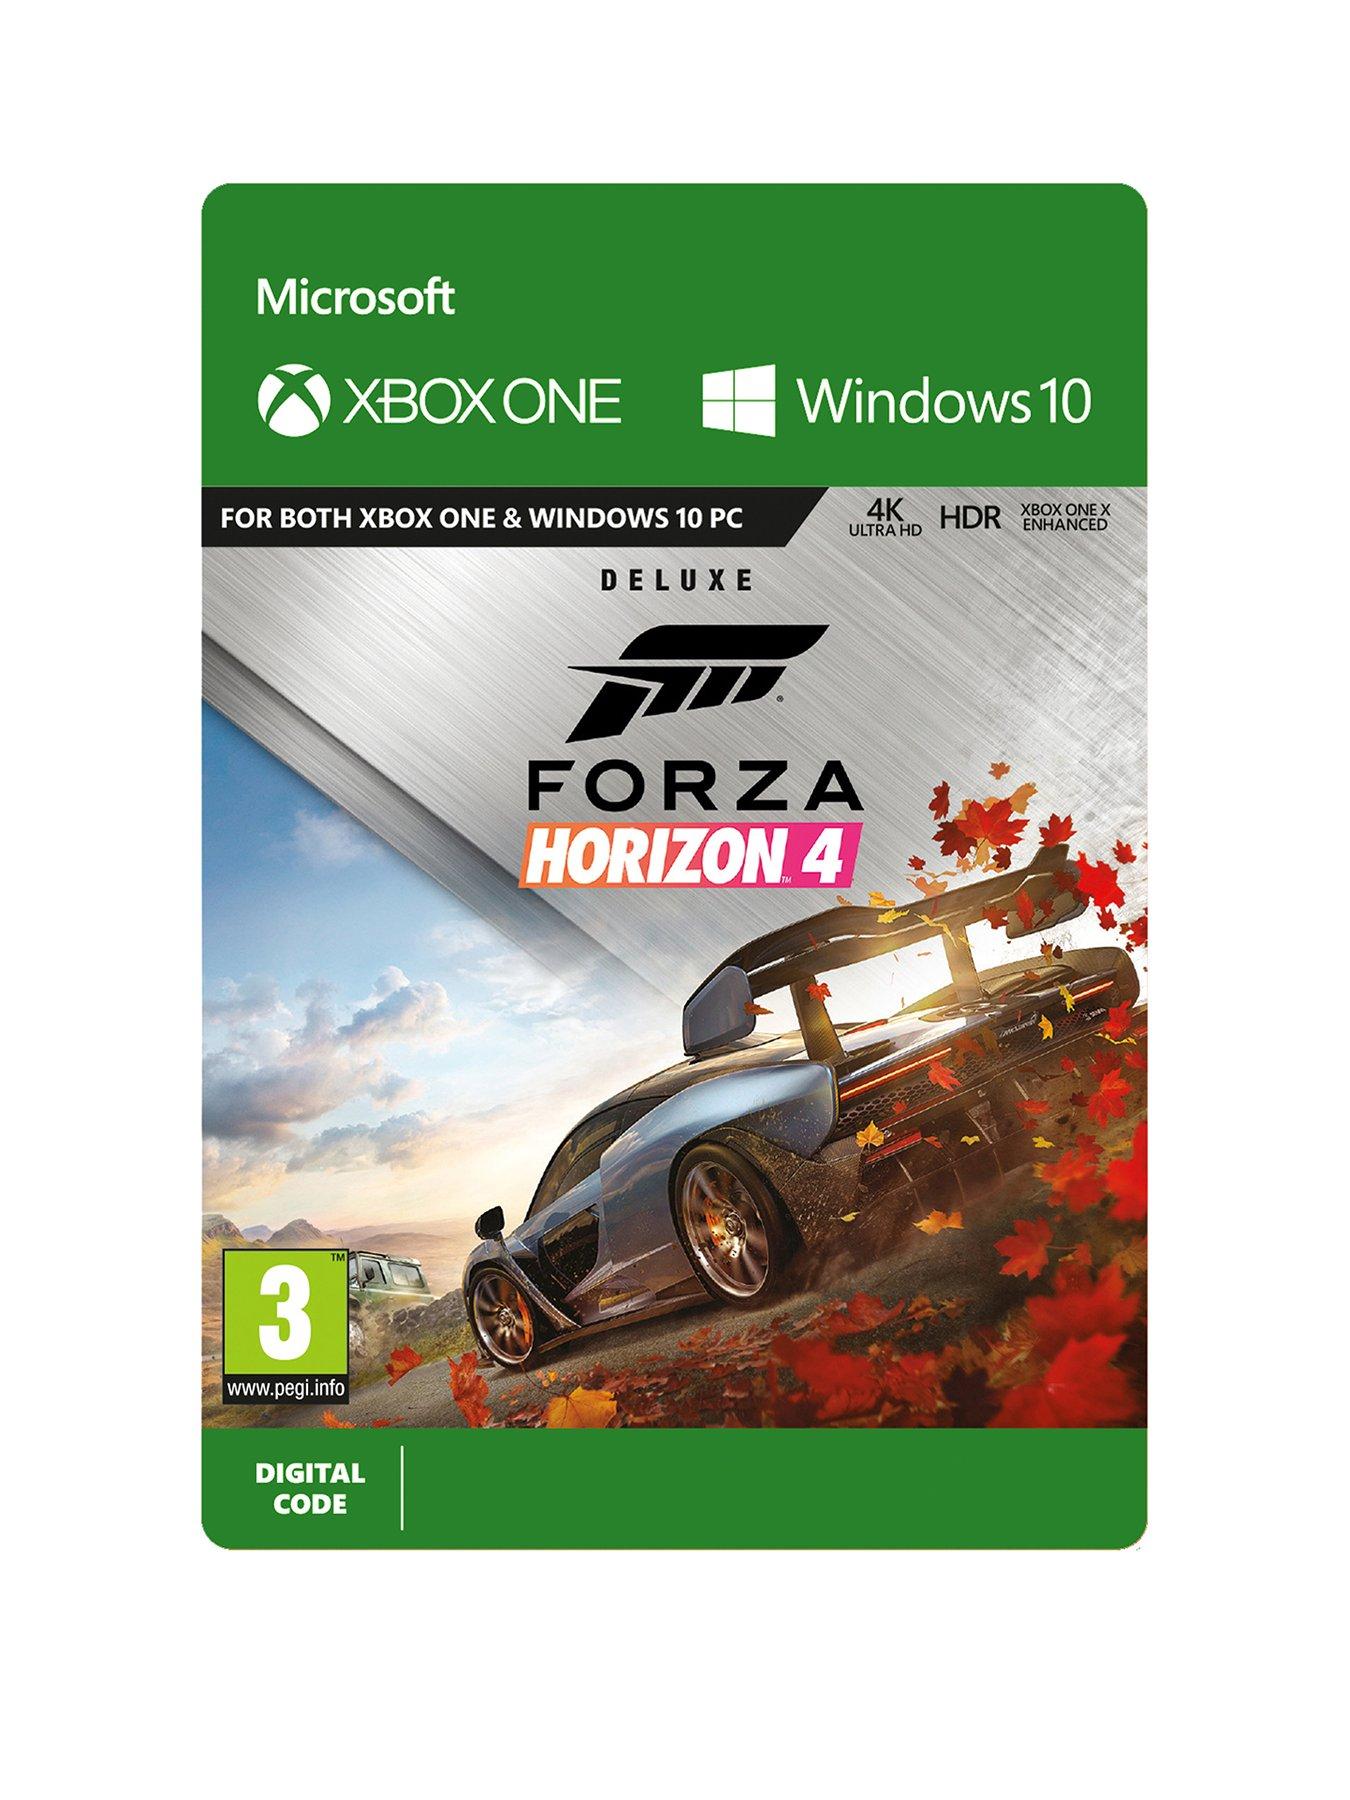 Xbox One Forza Horizon 4: Deluxe Edition - Digital Download